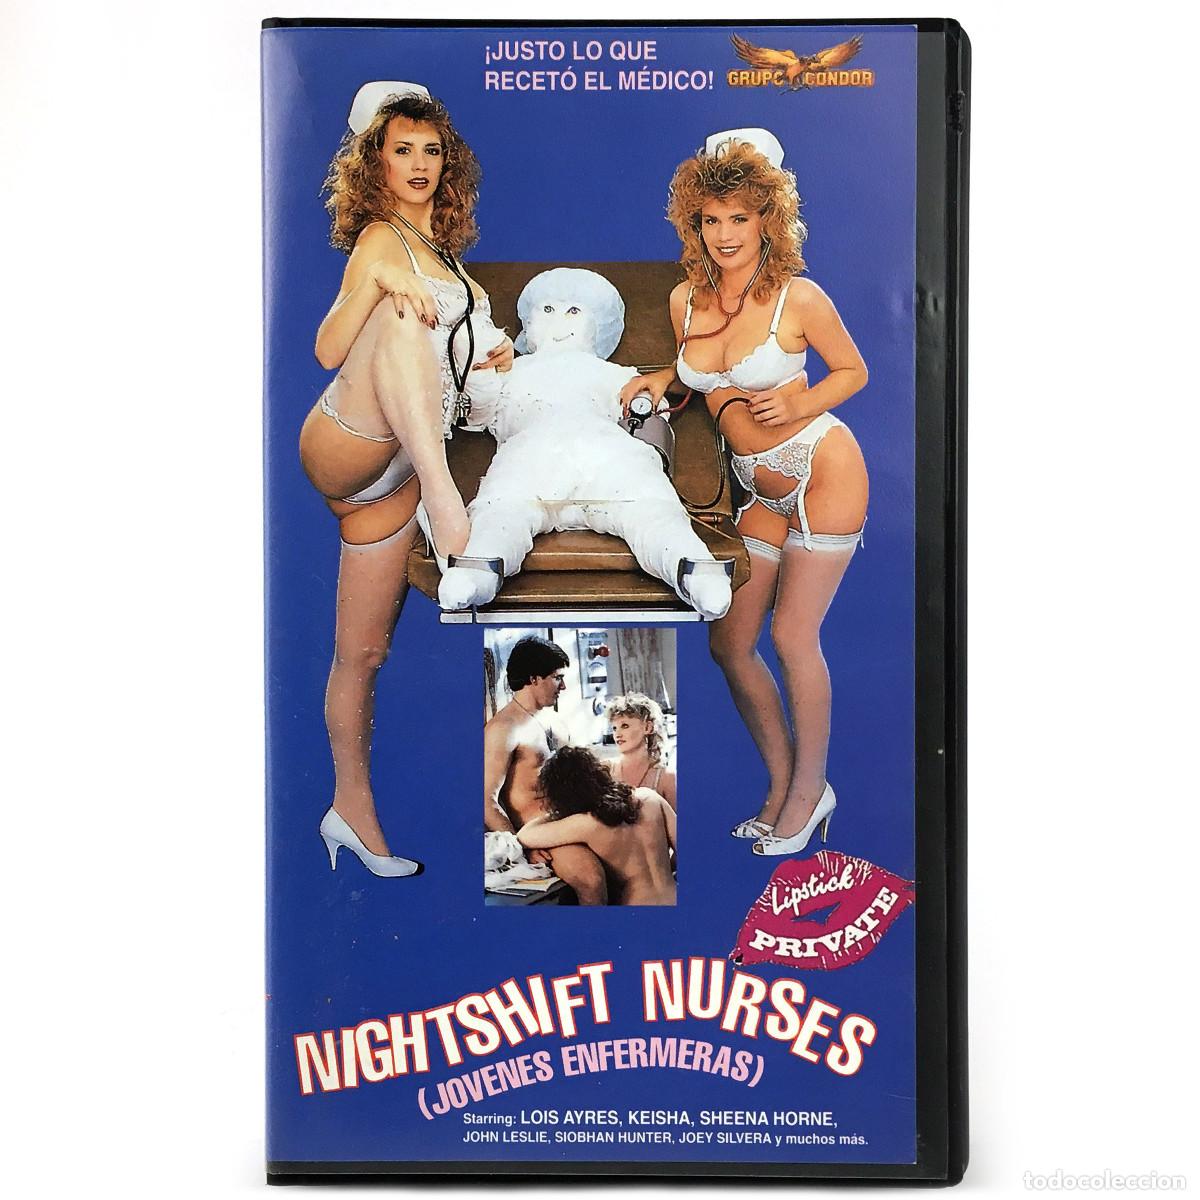 Nightshift nurses movie